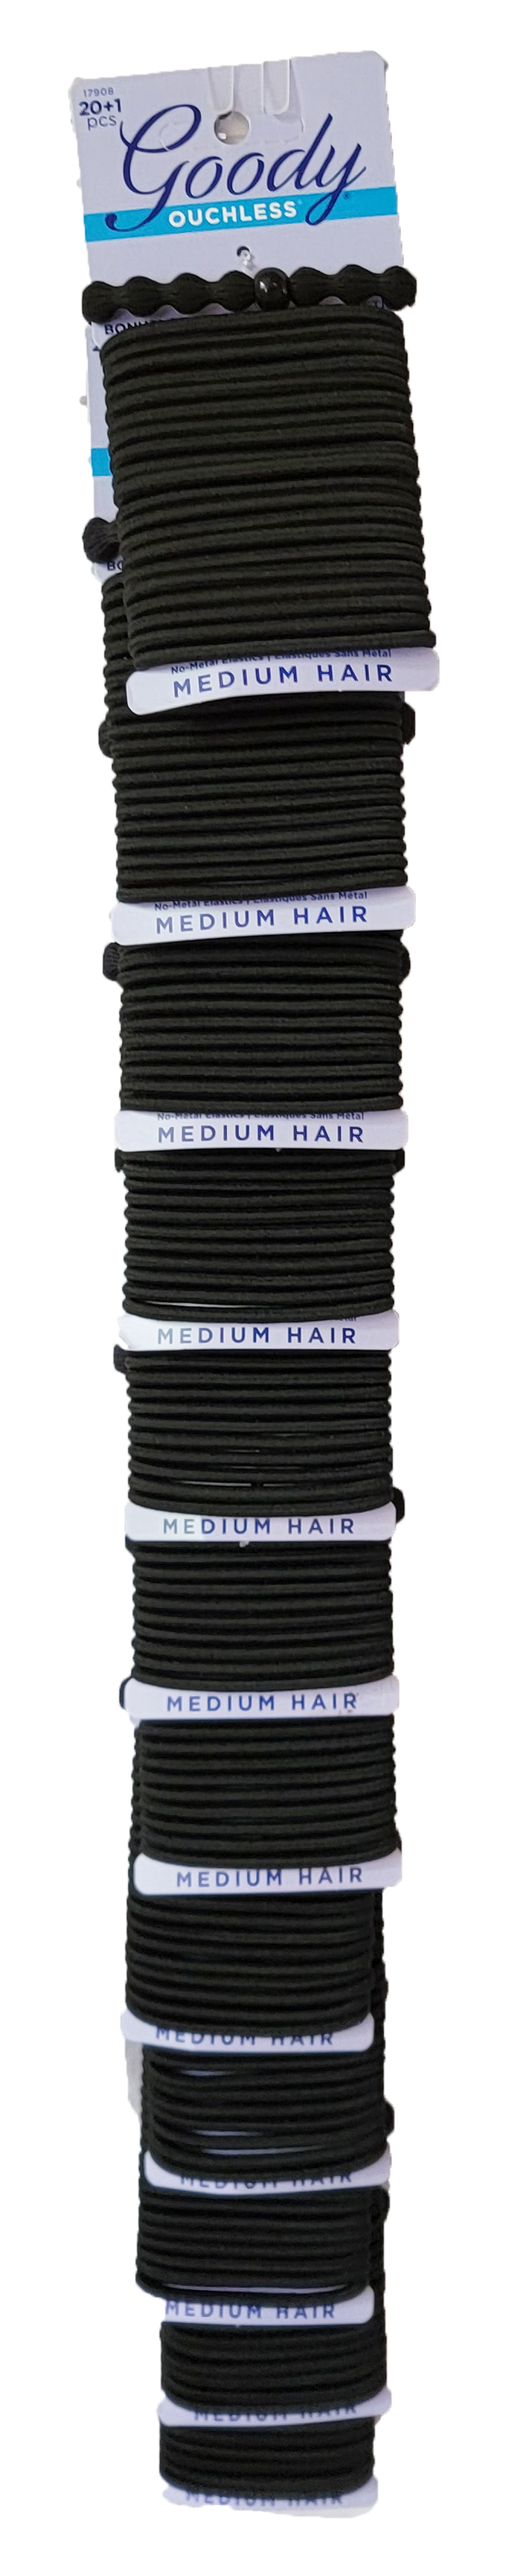 Goody Black Ouchless Hair Elastics 20 Count + 1 Bonus Forever Elastic, 12 Unit per Clip Strip